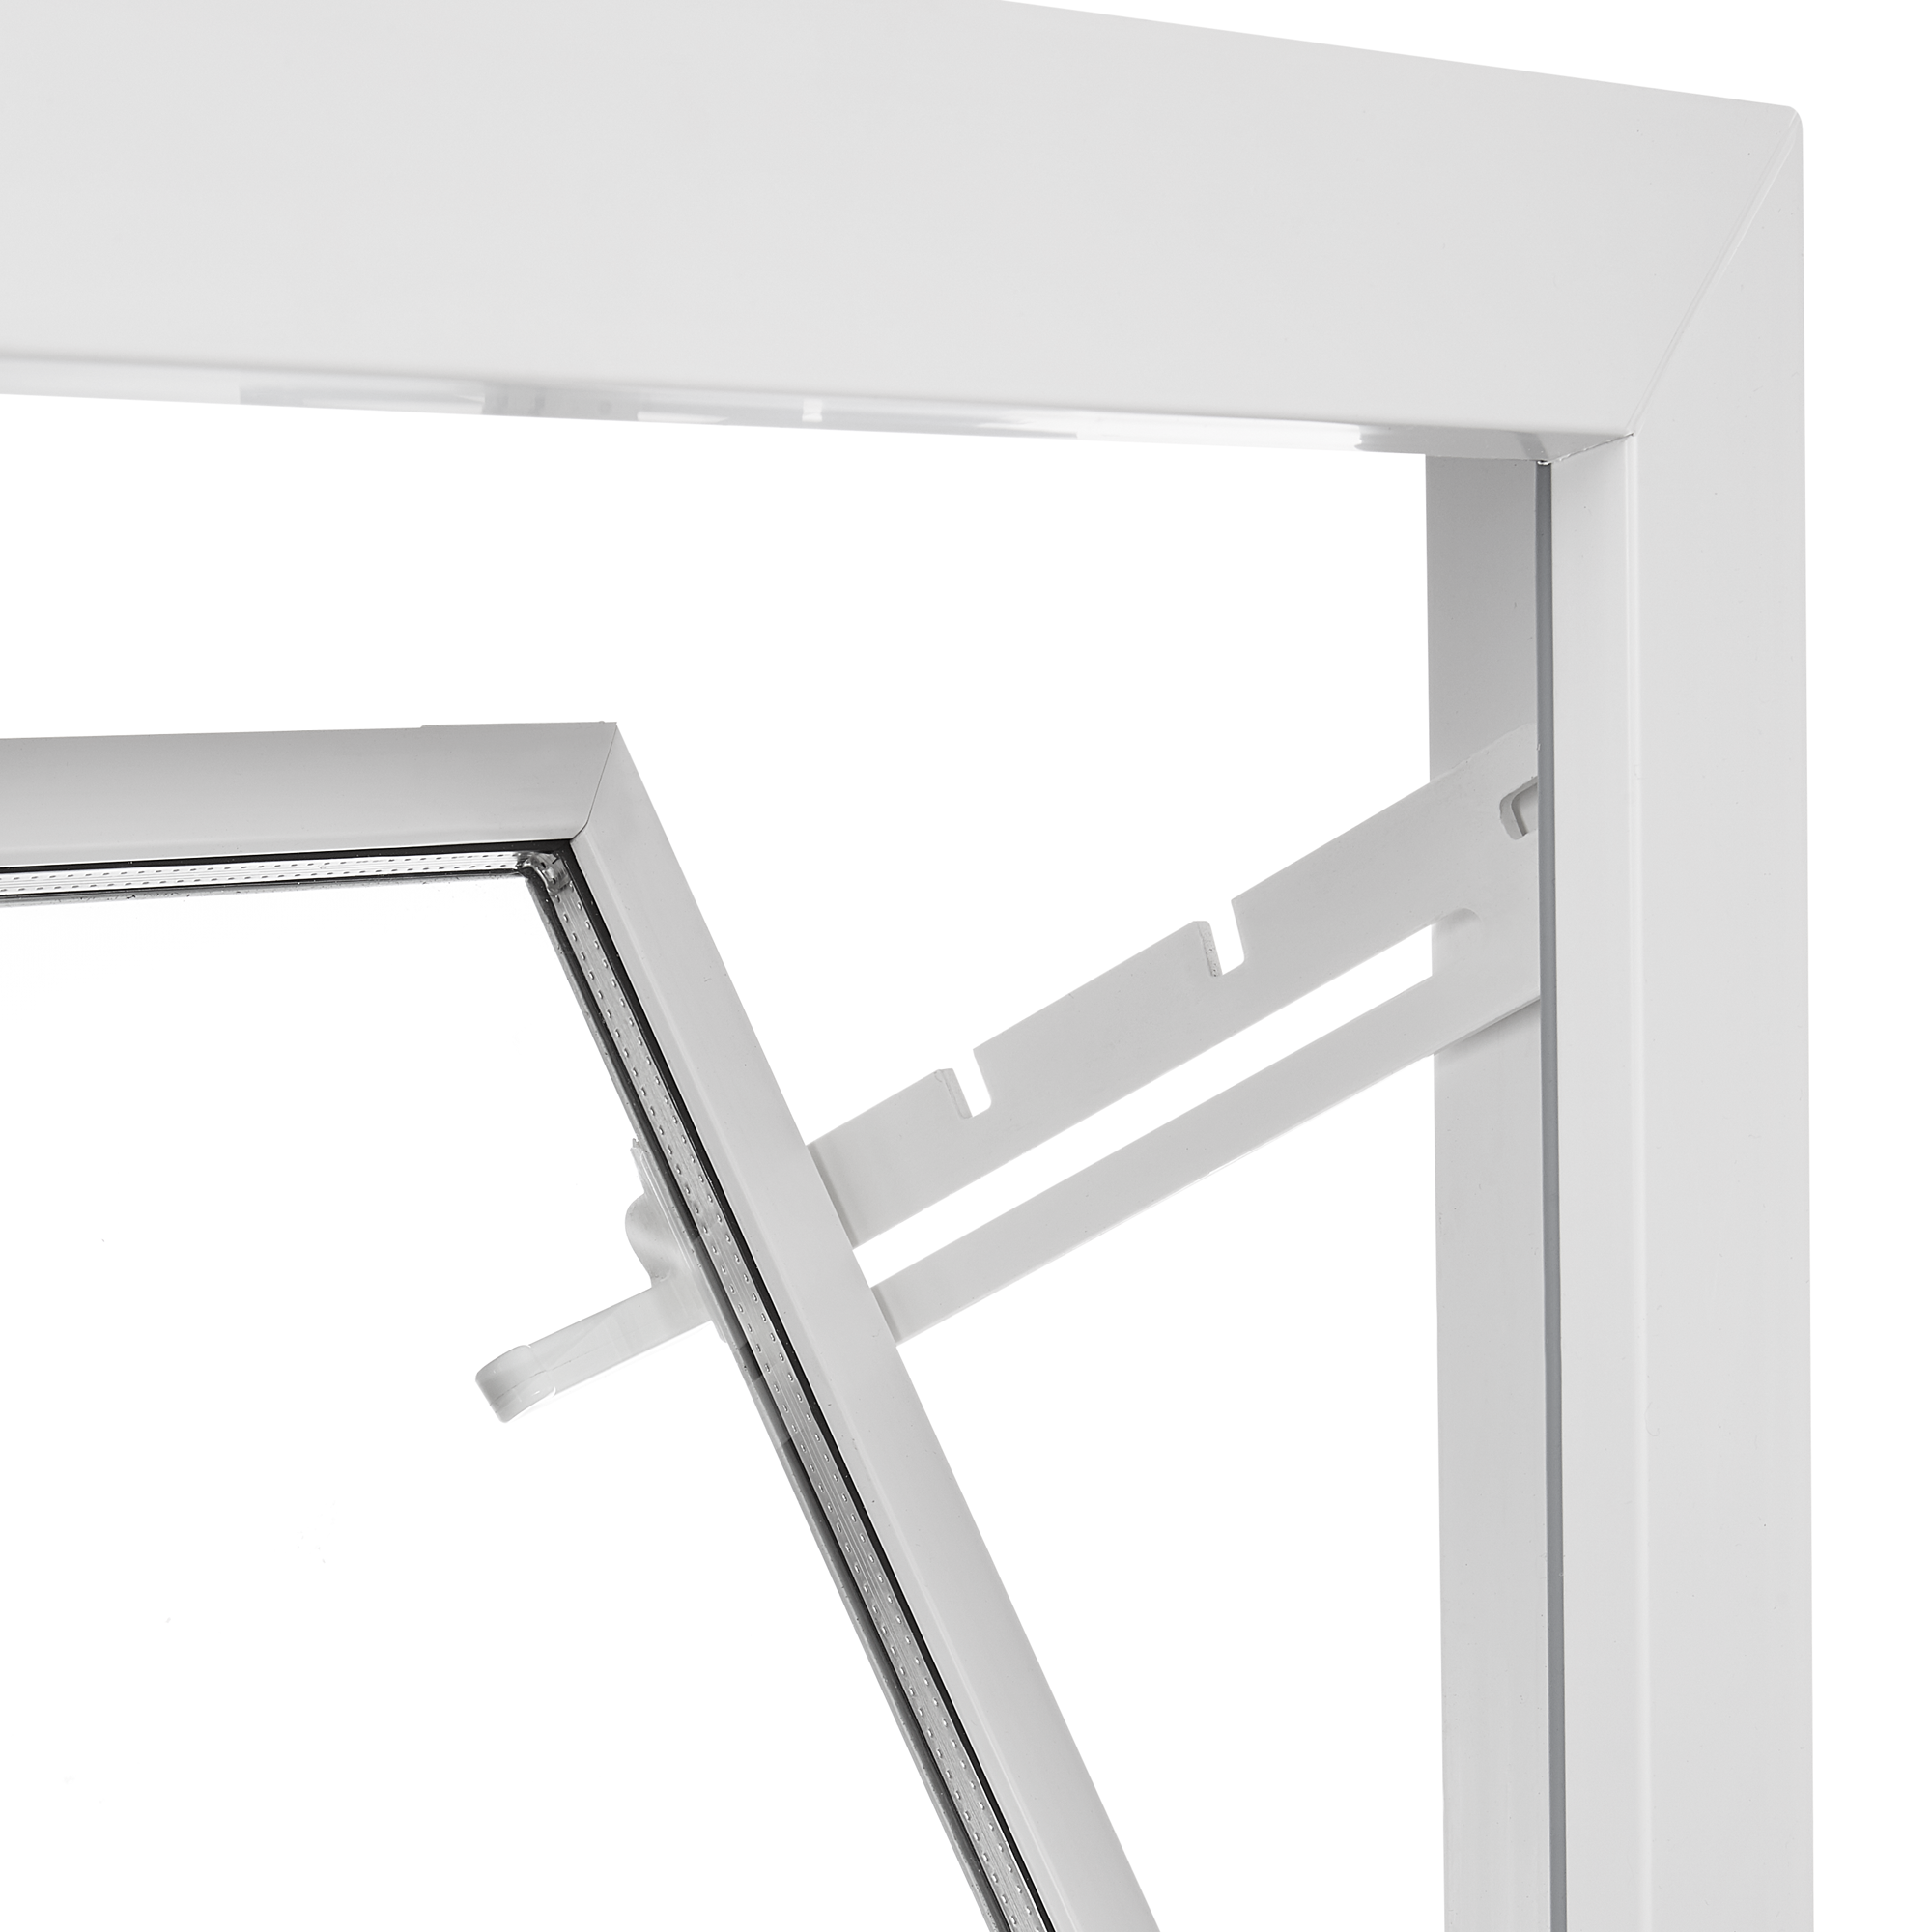 Kippfenster weiß 1-flügelig 60 x 50 cm + product picture